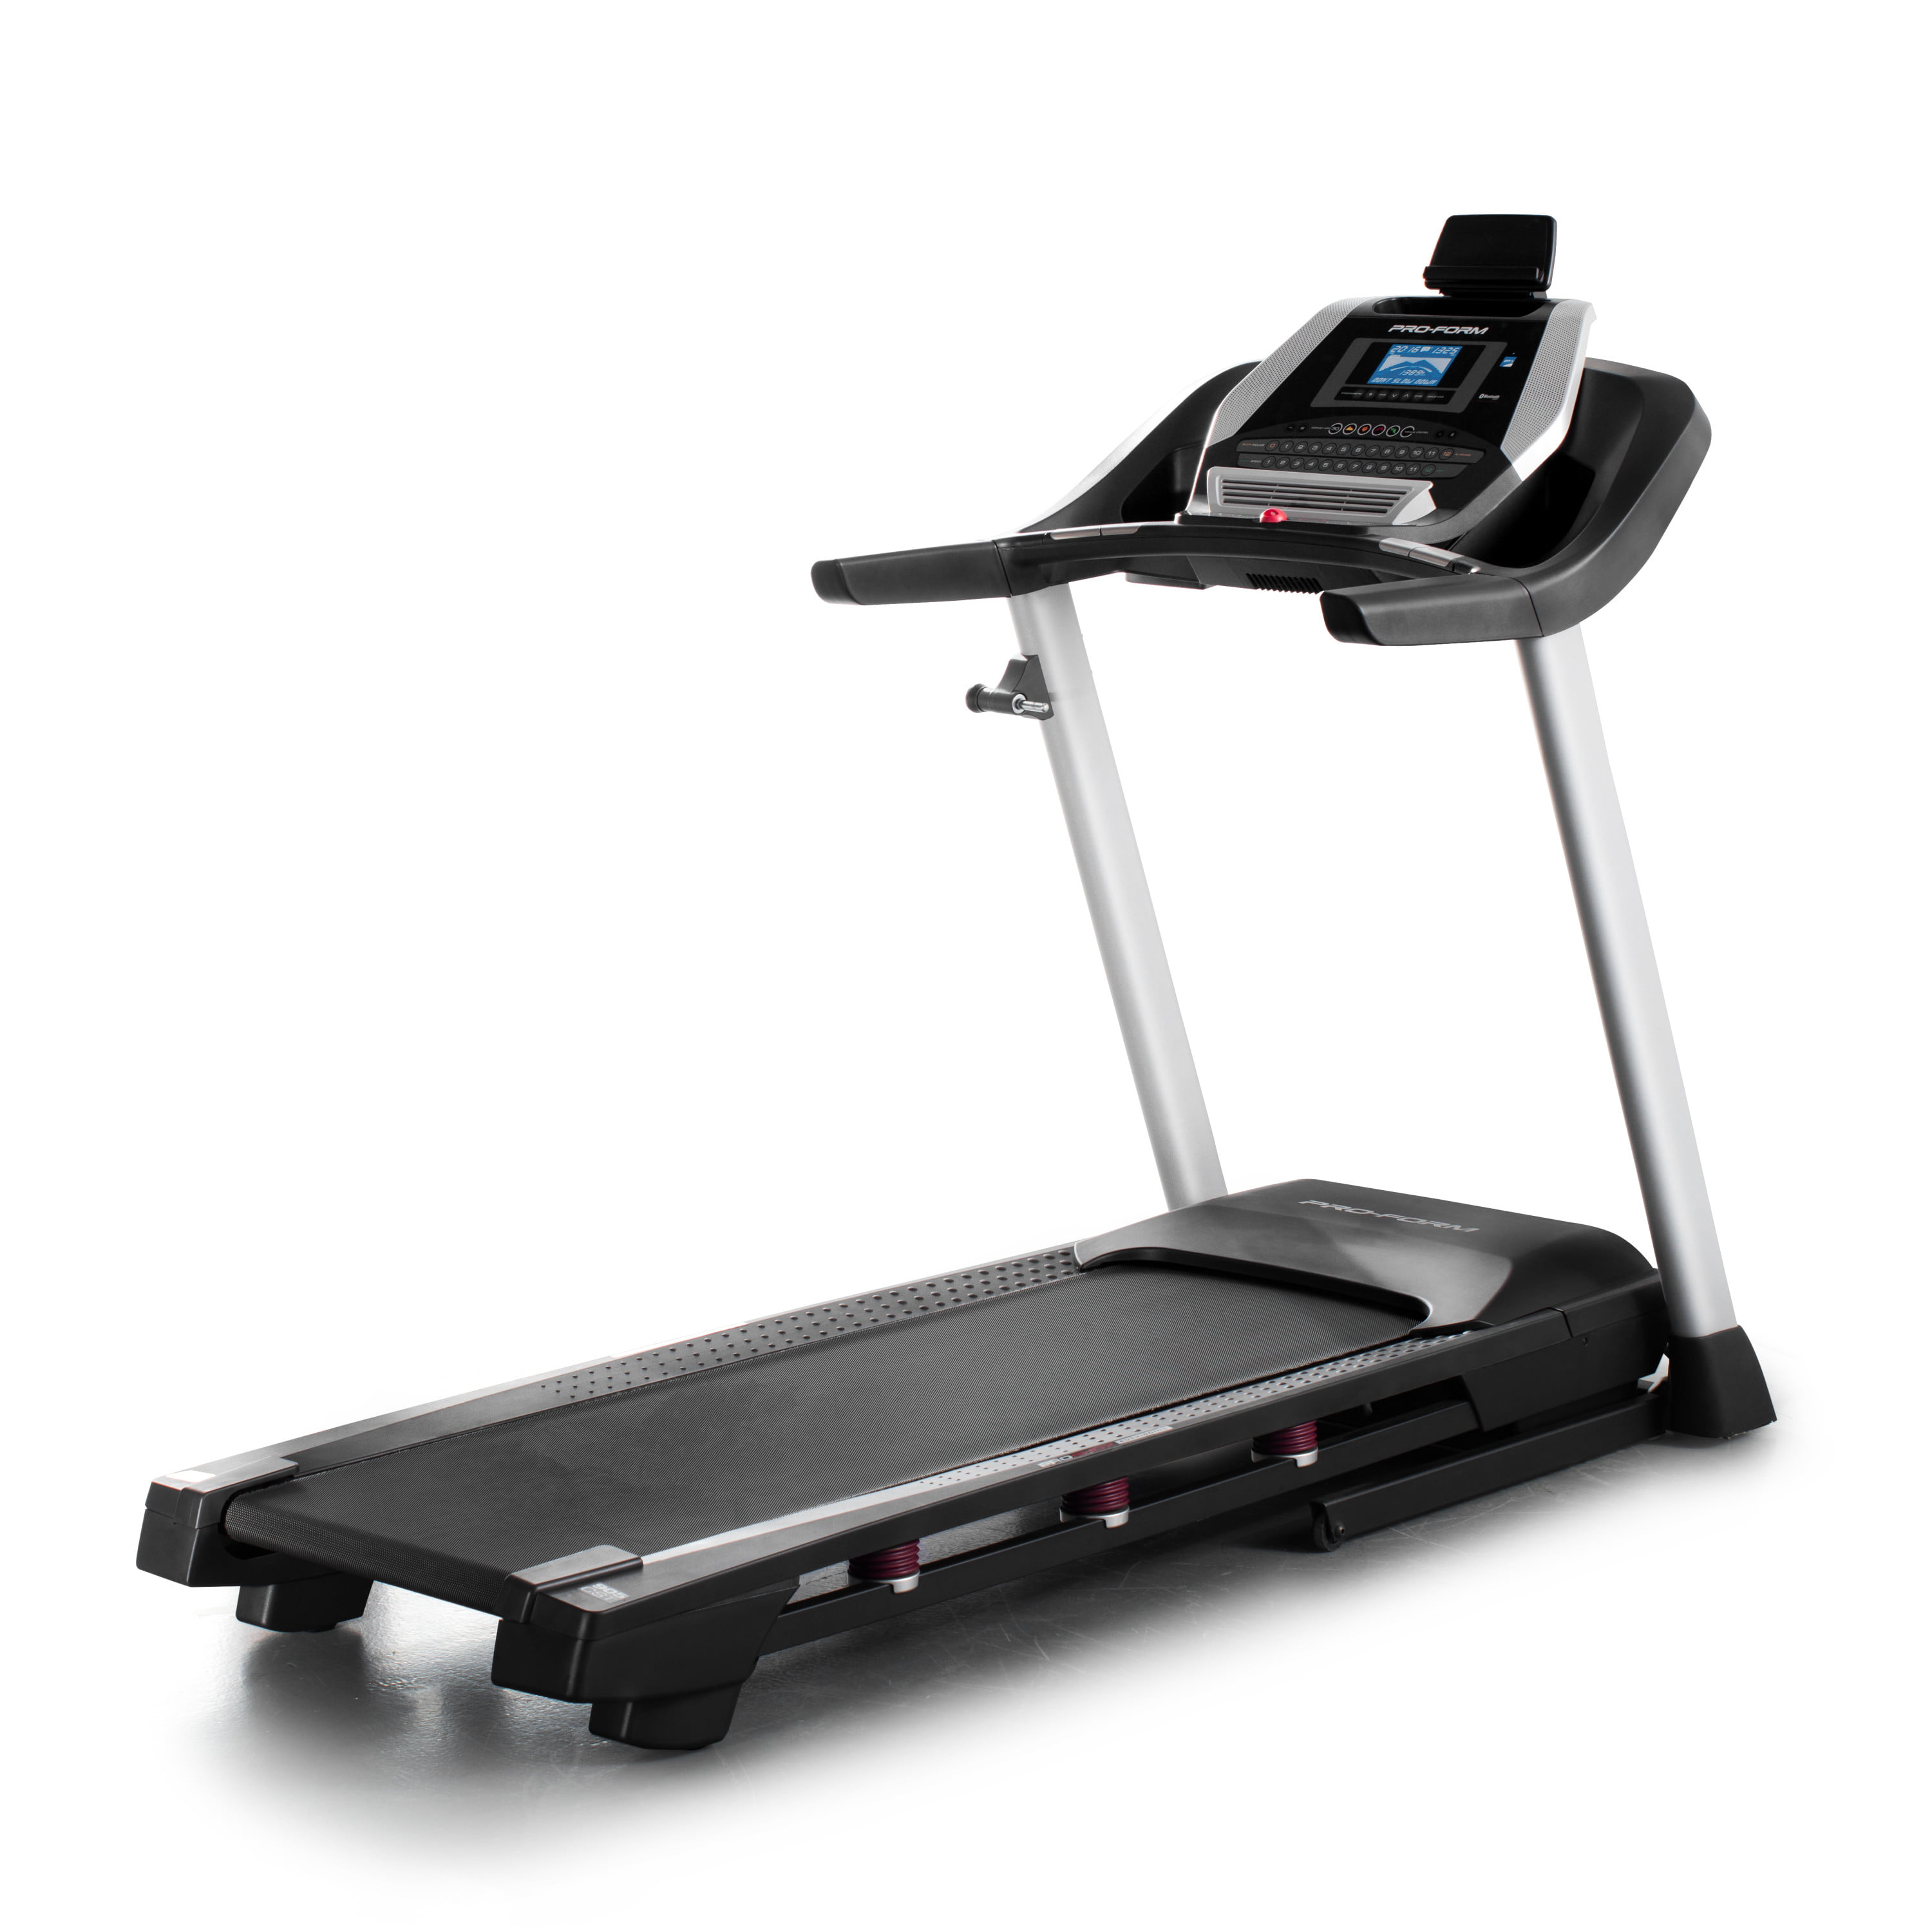 *New Replacement BELT* ProForm Healthy Heart Treadmill Model 535x 